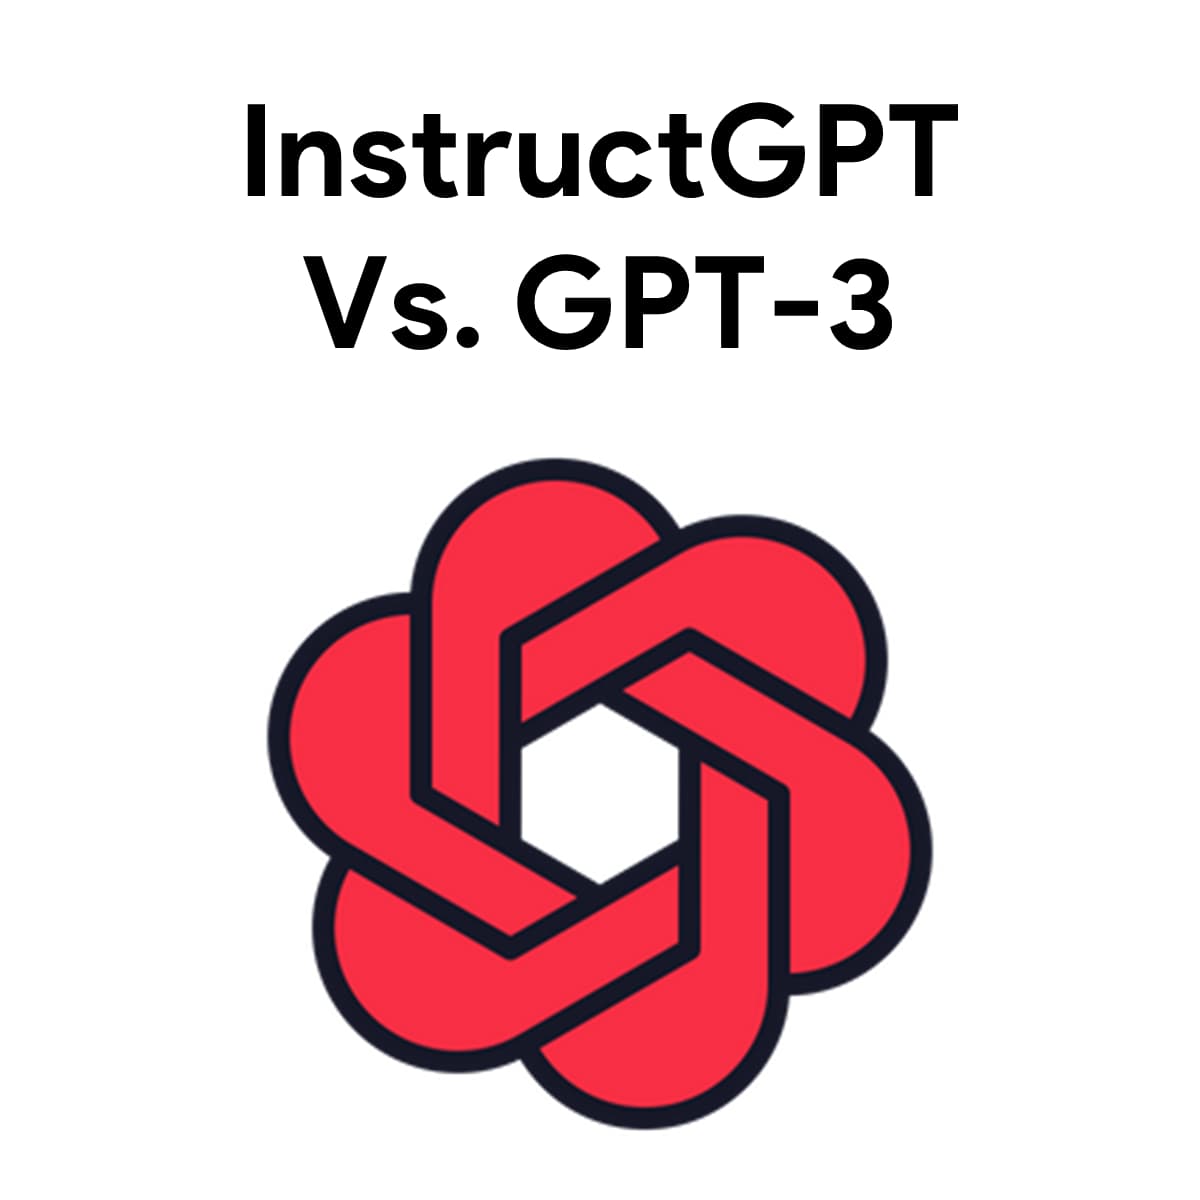 IntructGPT vs GPT-3